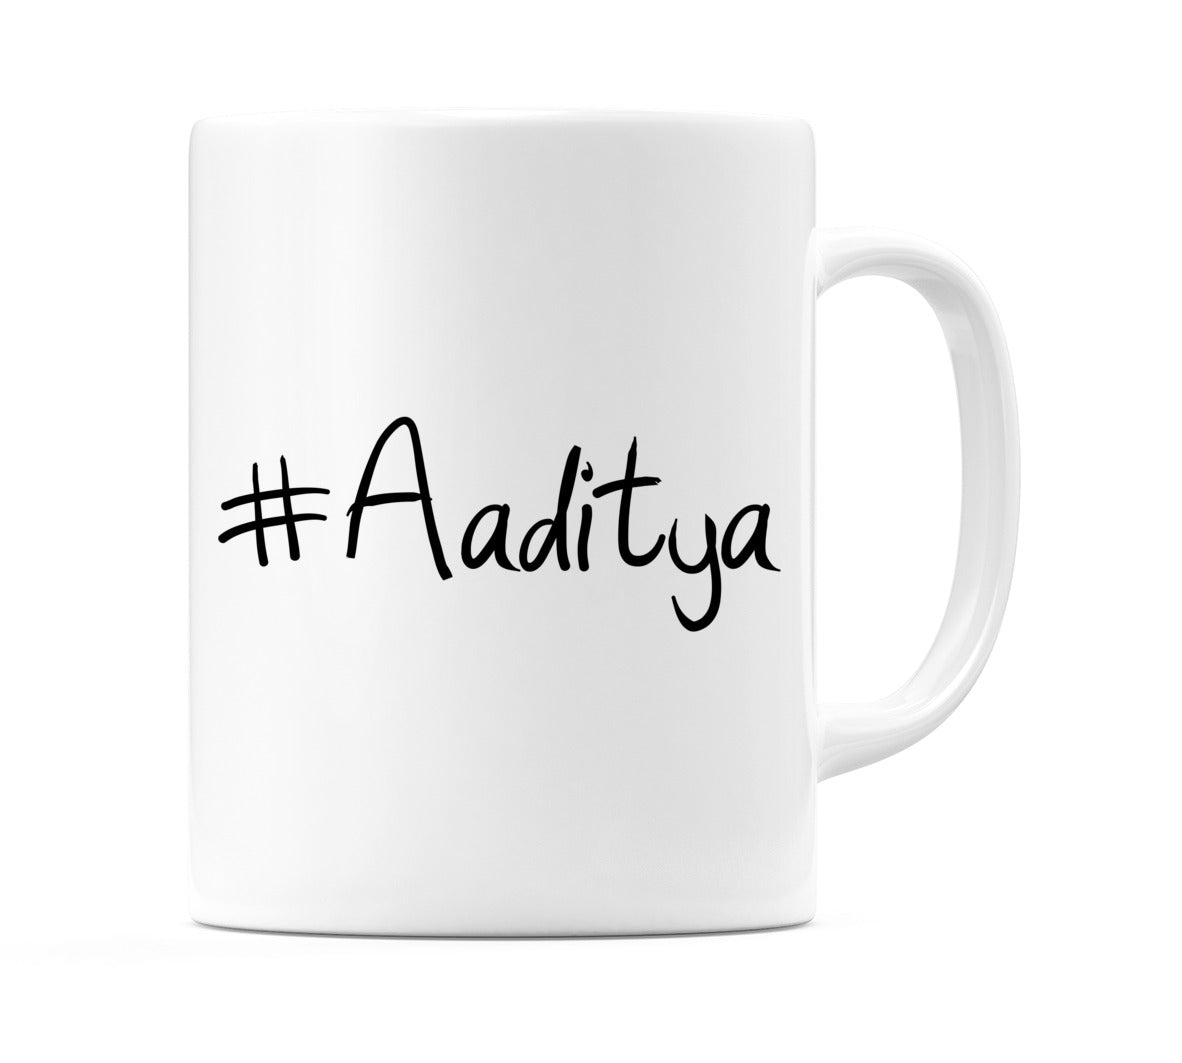 #Aaditya Mug